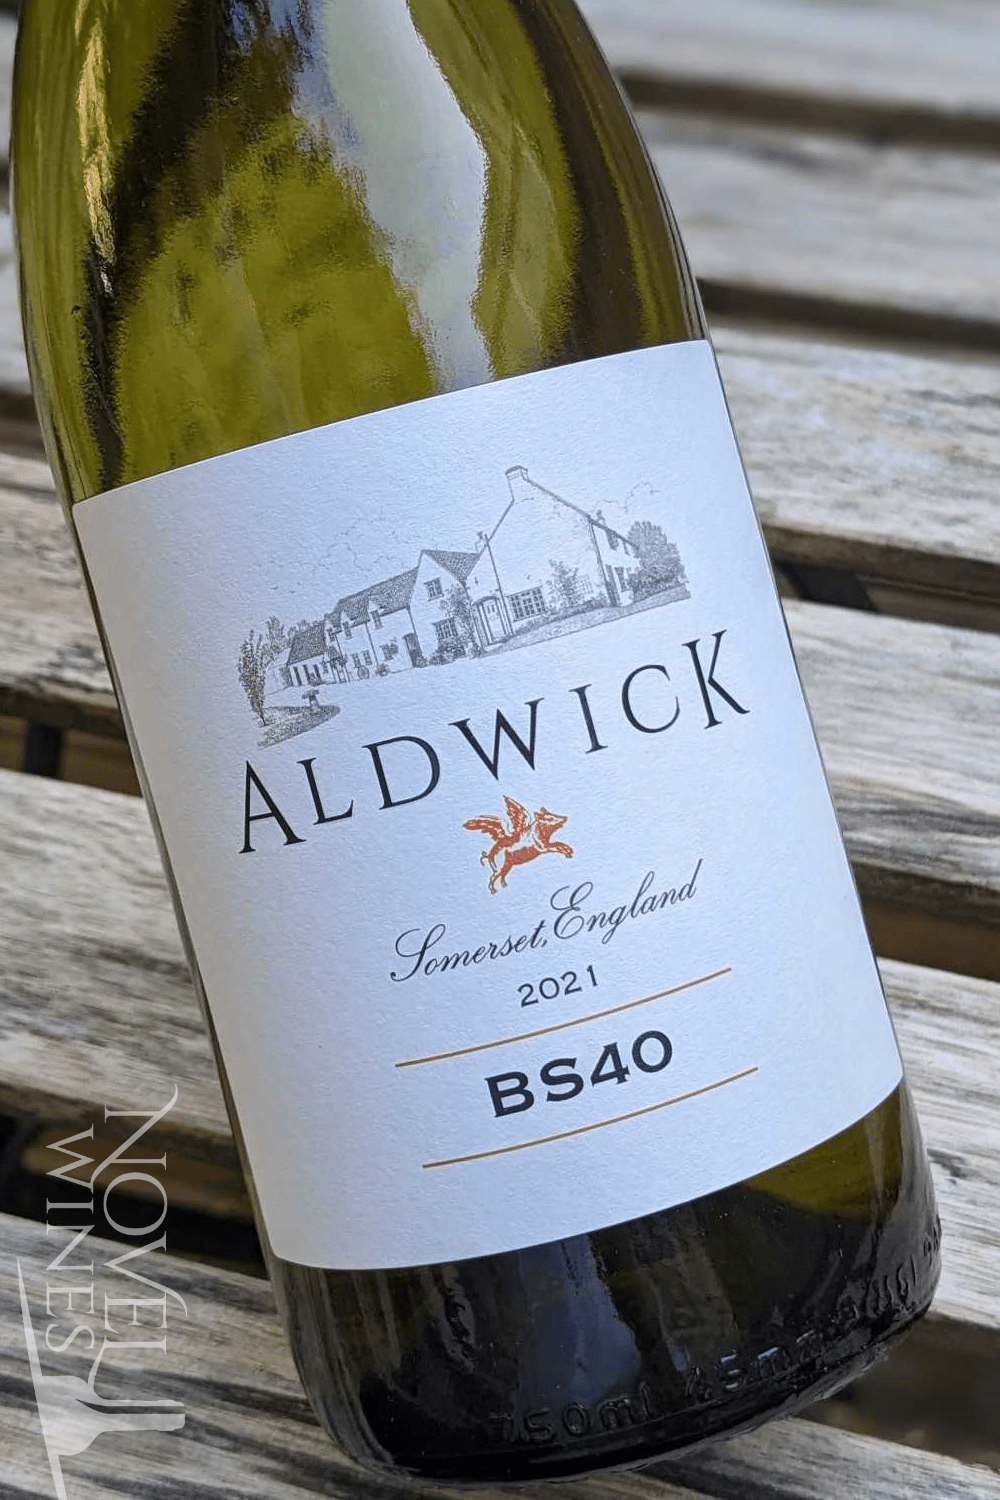 Aldwick Court Farm & Vineyard White Wine Aldwick Estate BS40 English White Wine Blend 2021, England